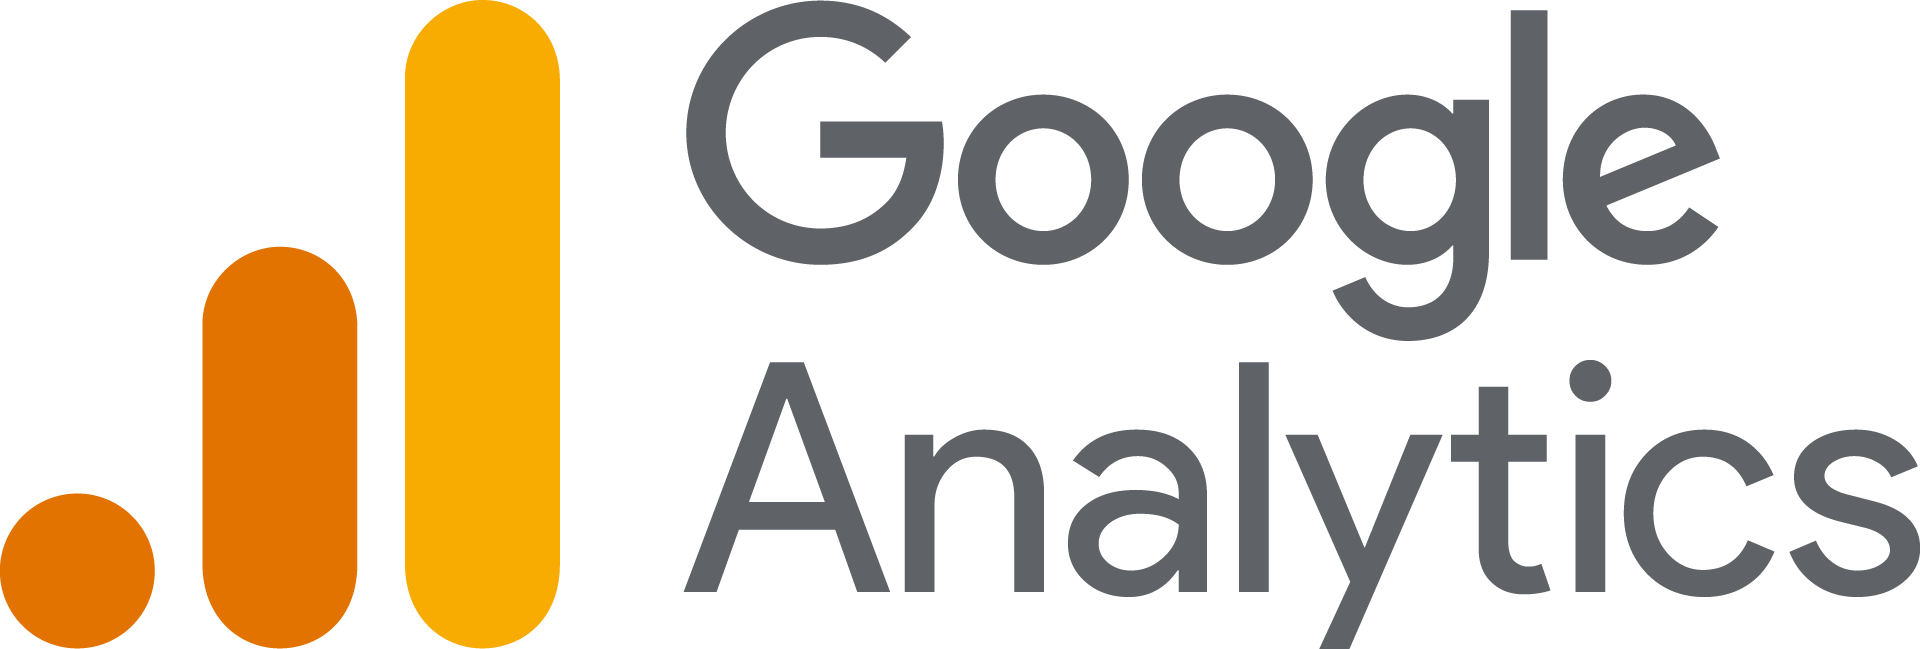 google-analytics-logo-01